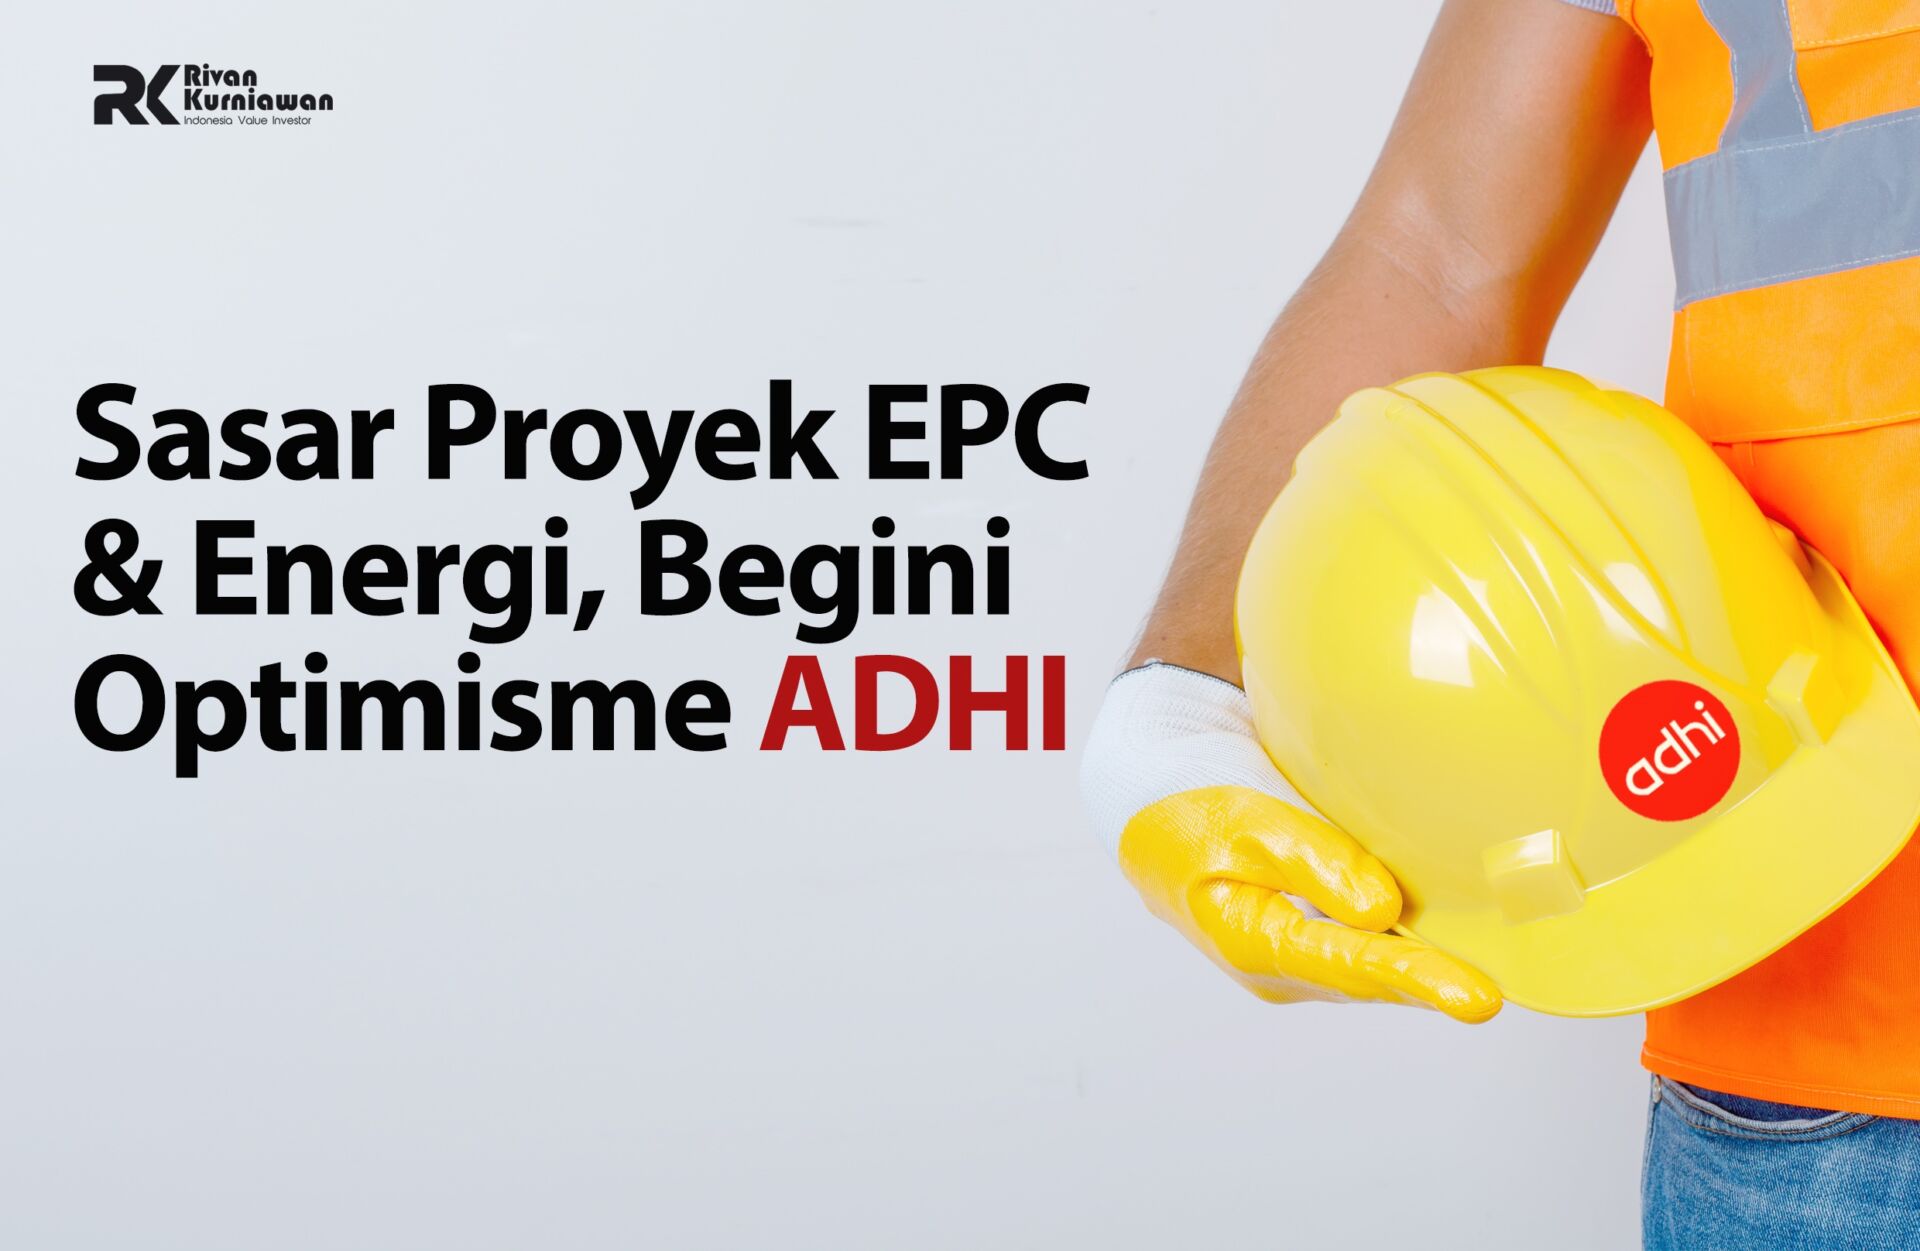 Sasar Proyek EPC, Begini Optimisme ADHI